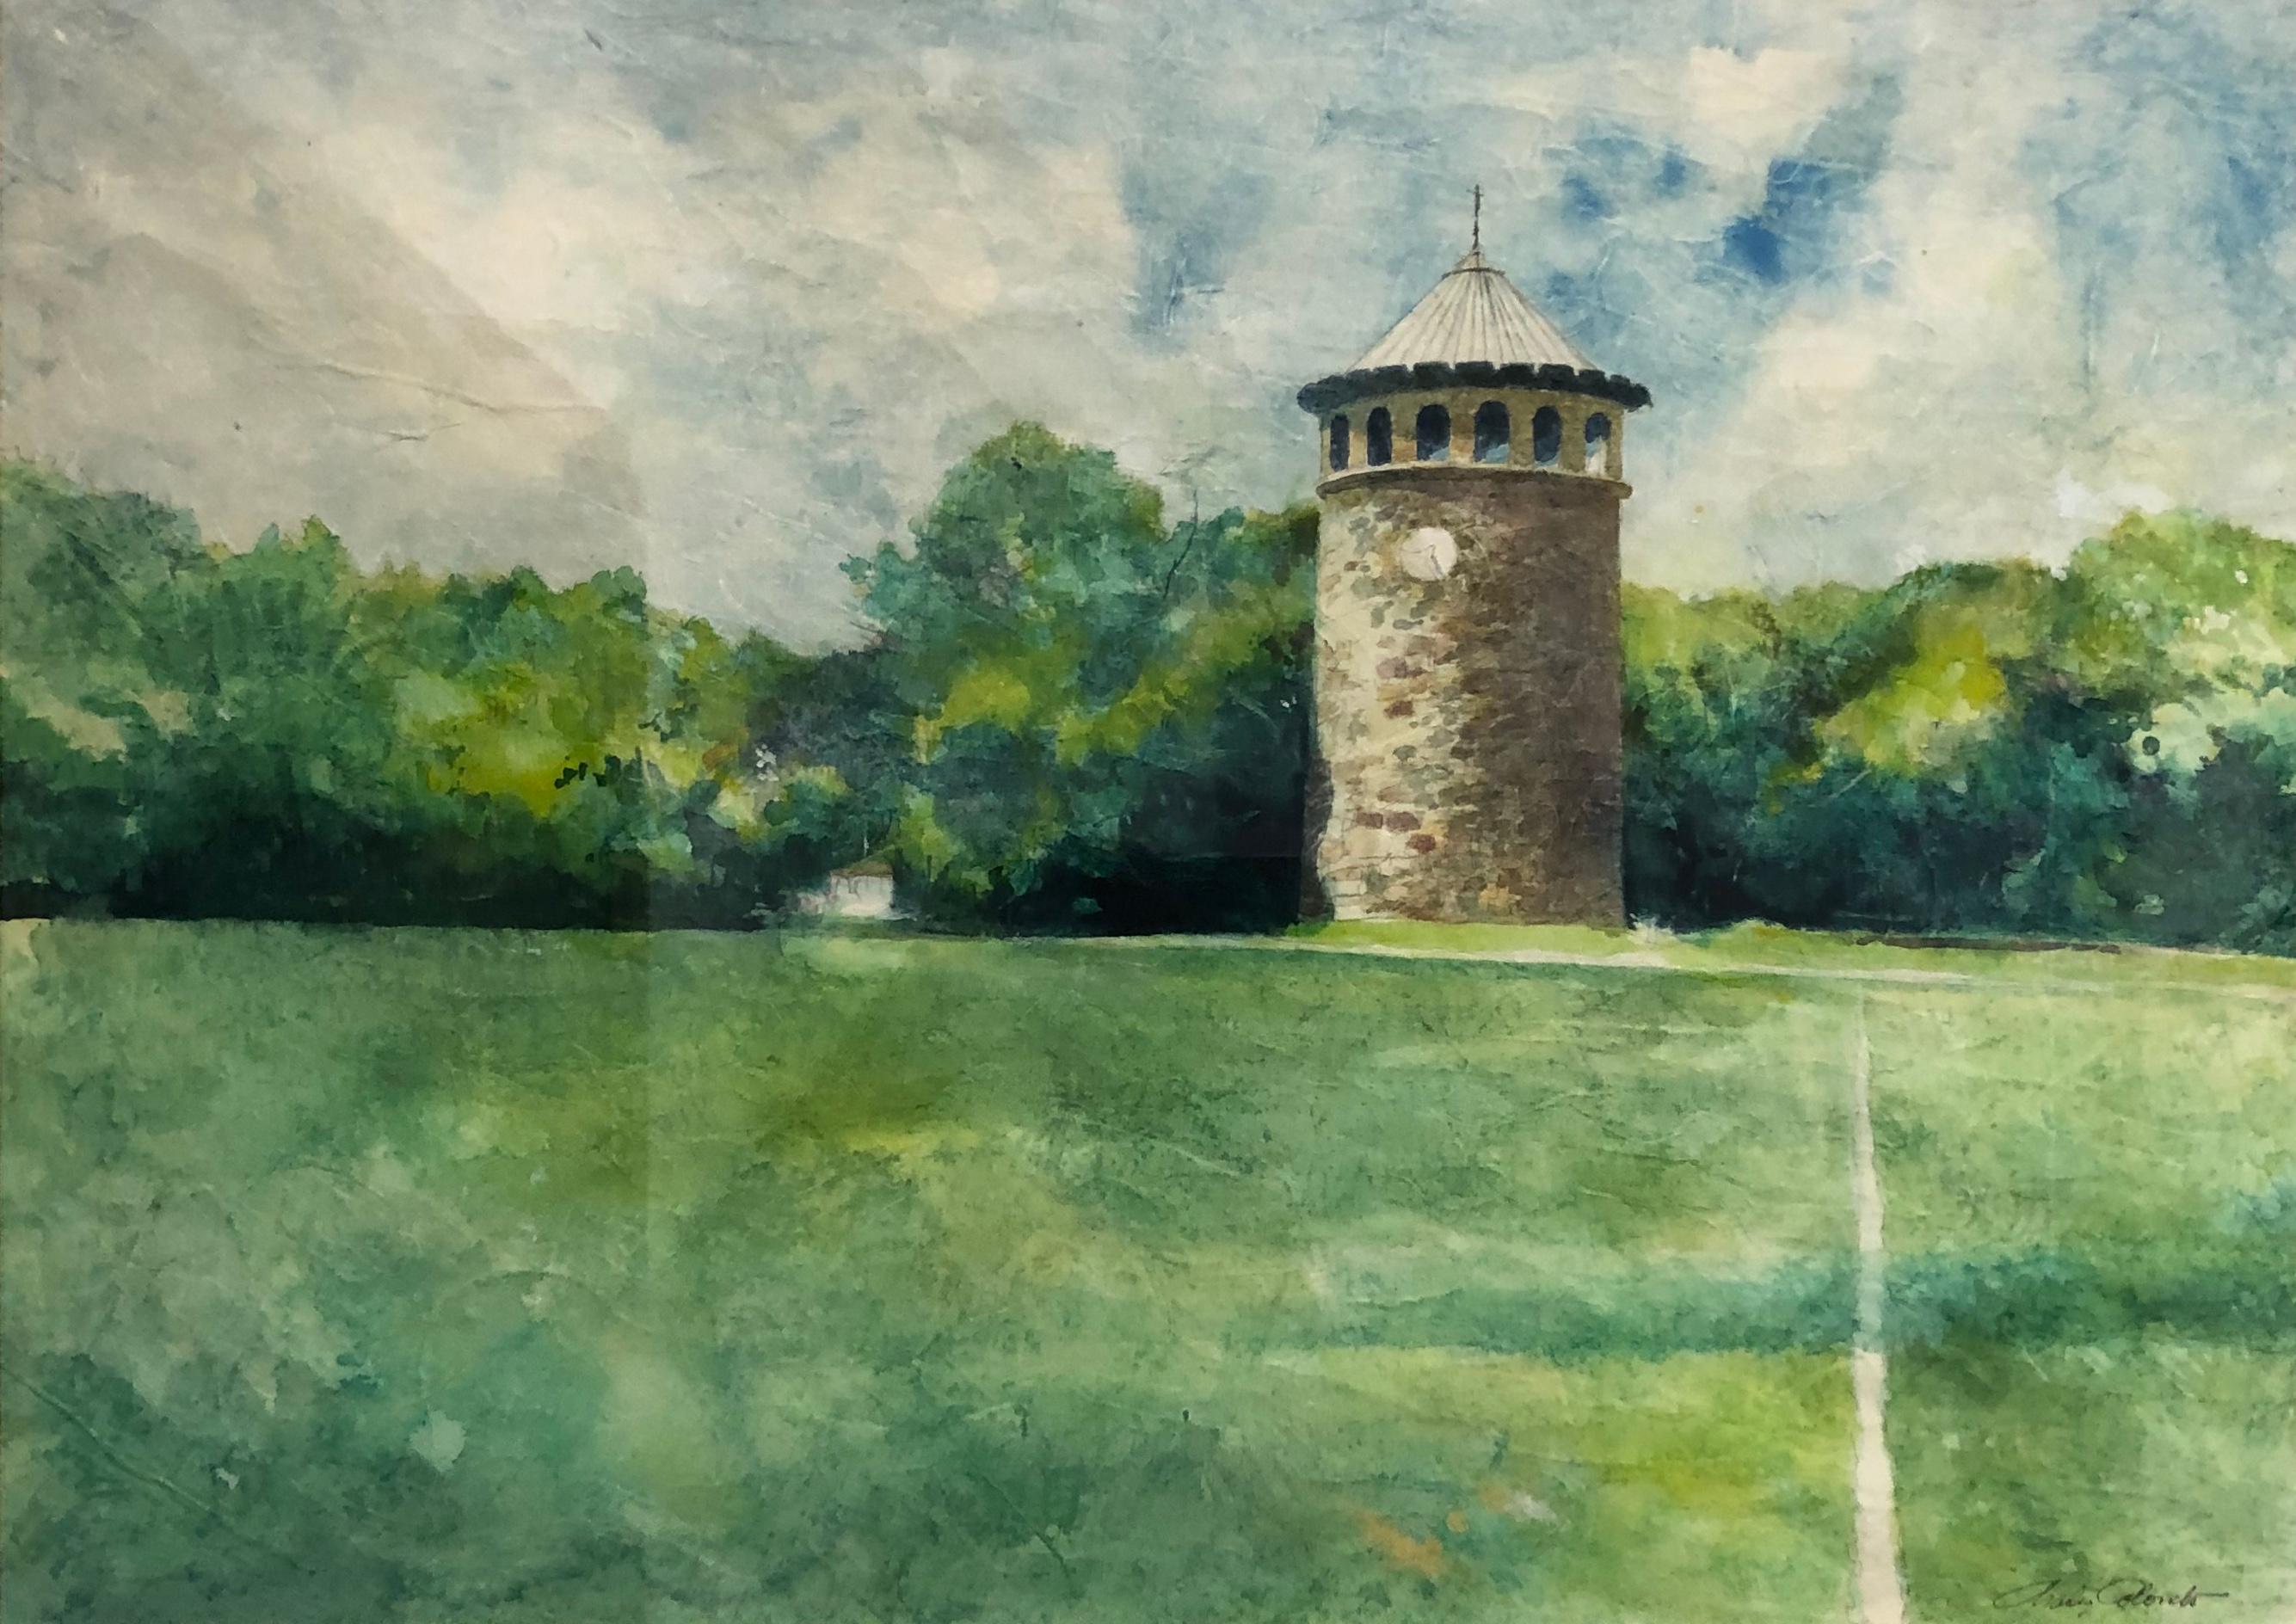 Landscape Painting Charles Colombo - Rockford Park - Park